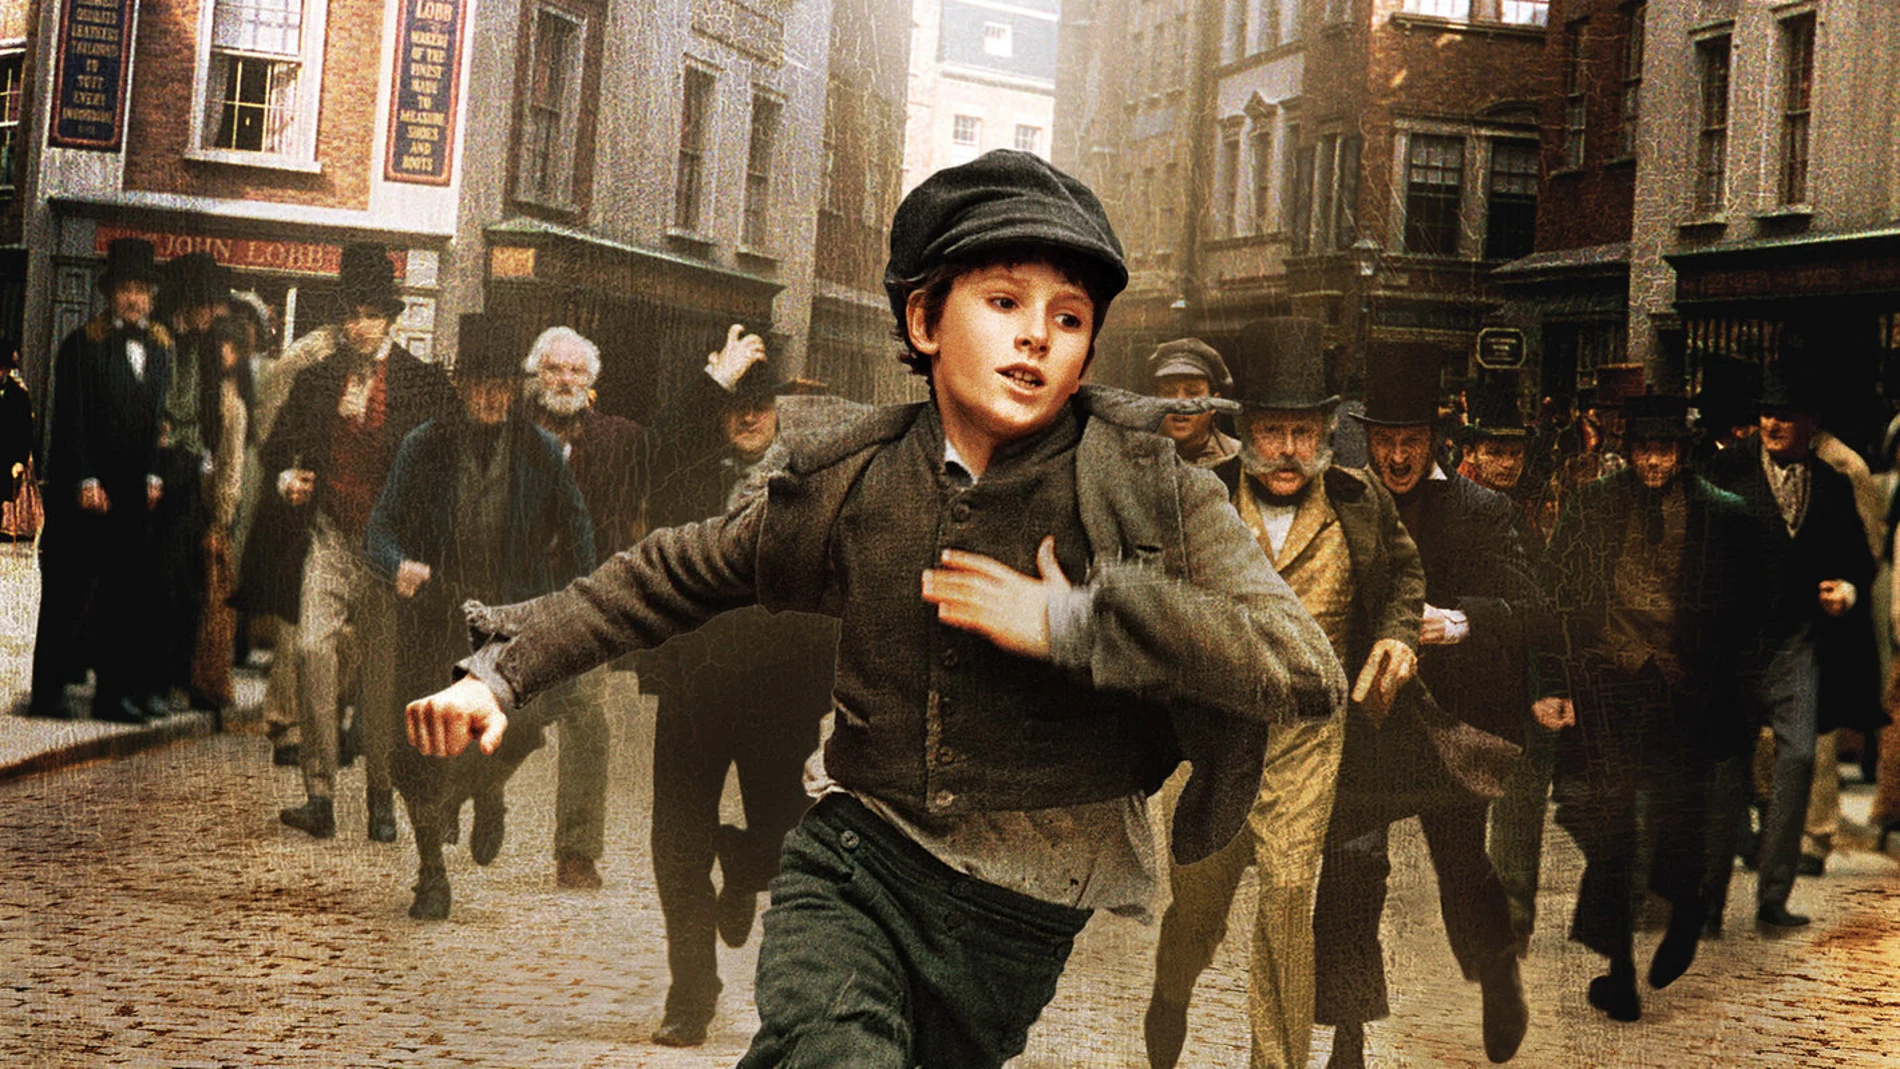 Cartel de la película "Oliver Twist", de Roman Polanski